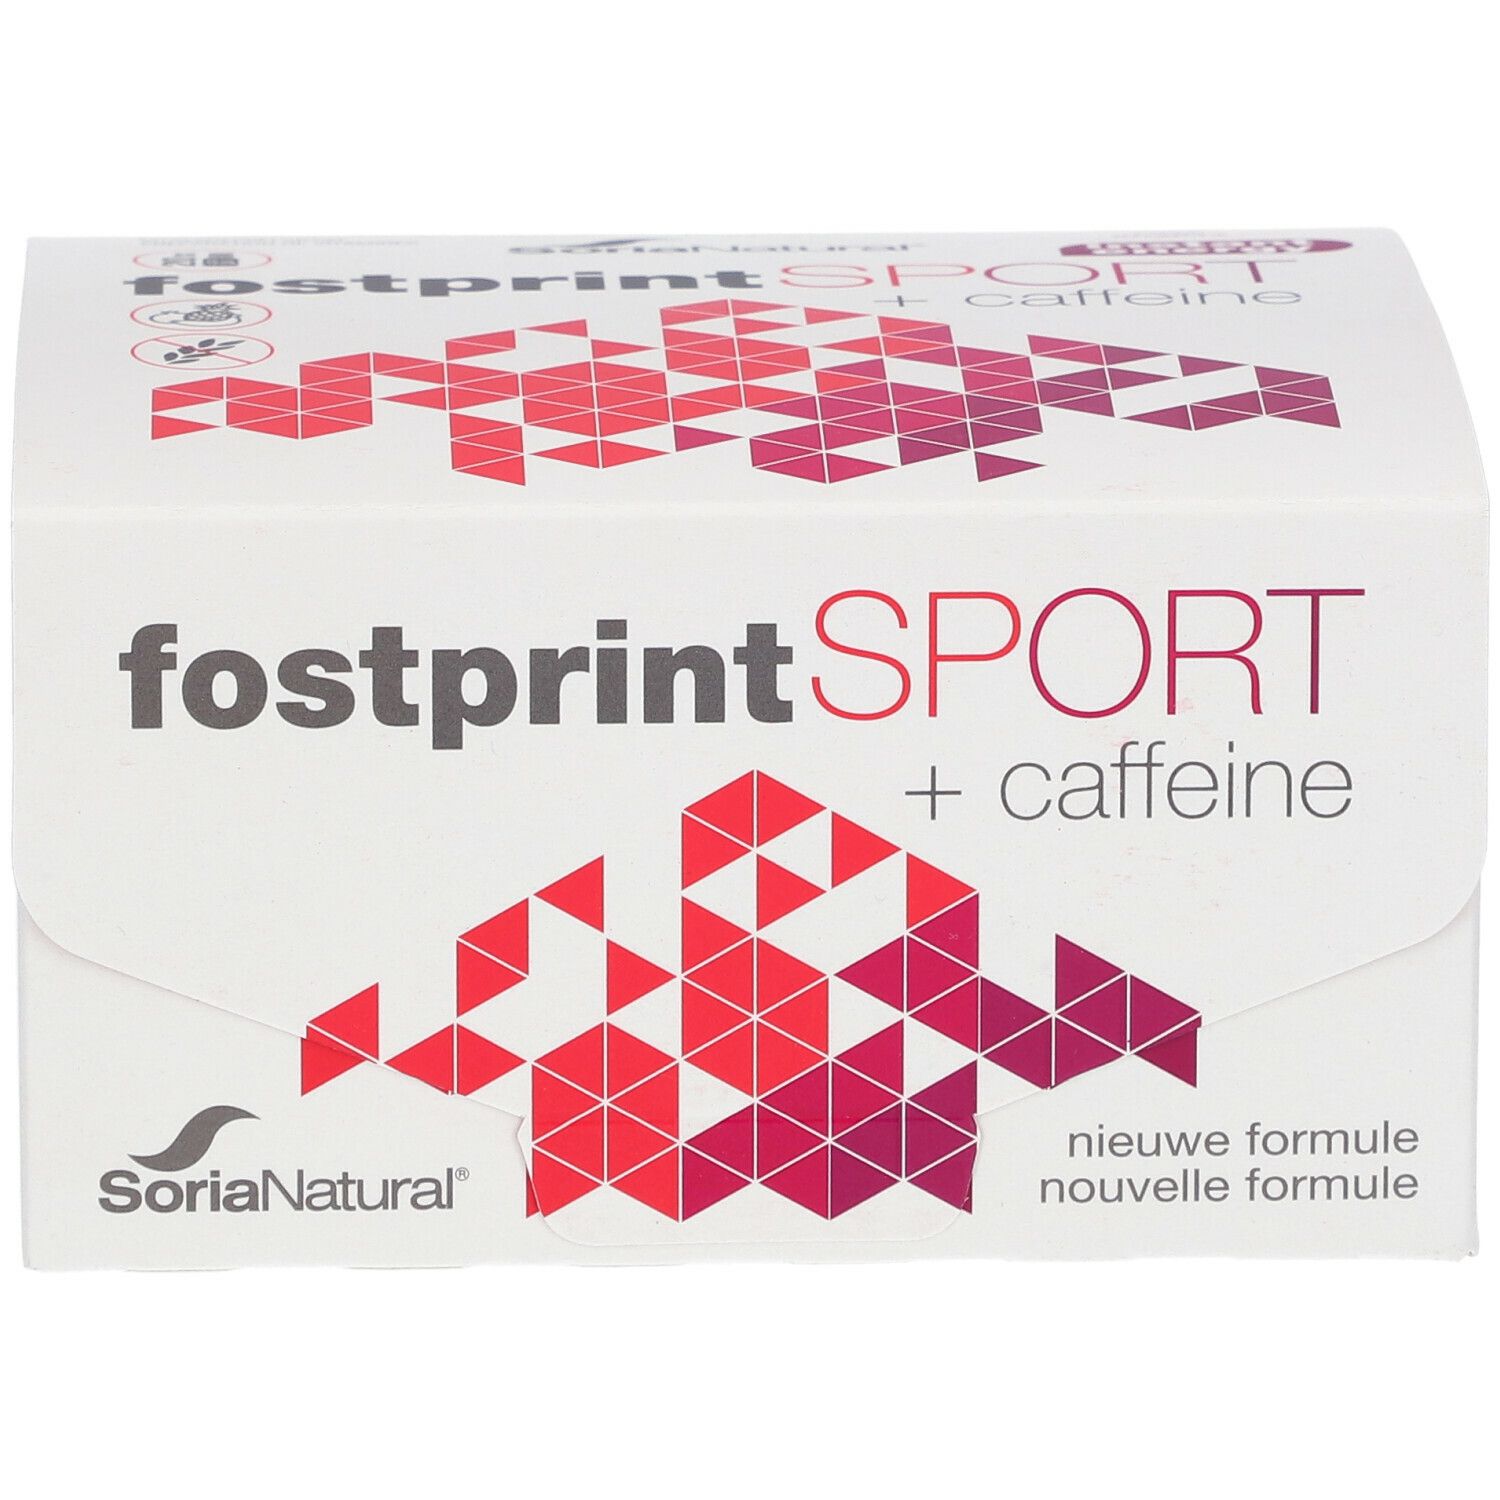 Soria Natural® Fost Print Sport